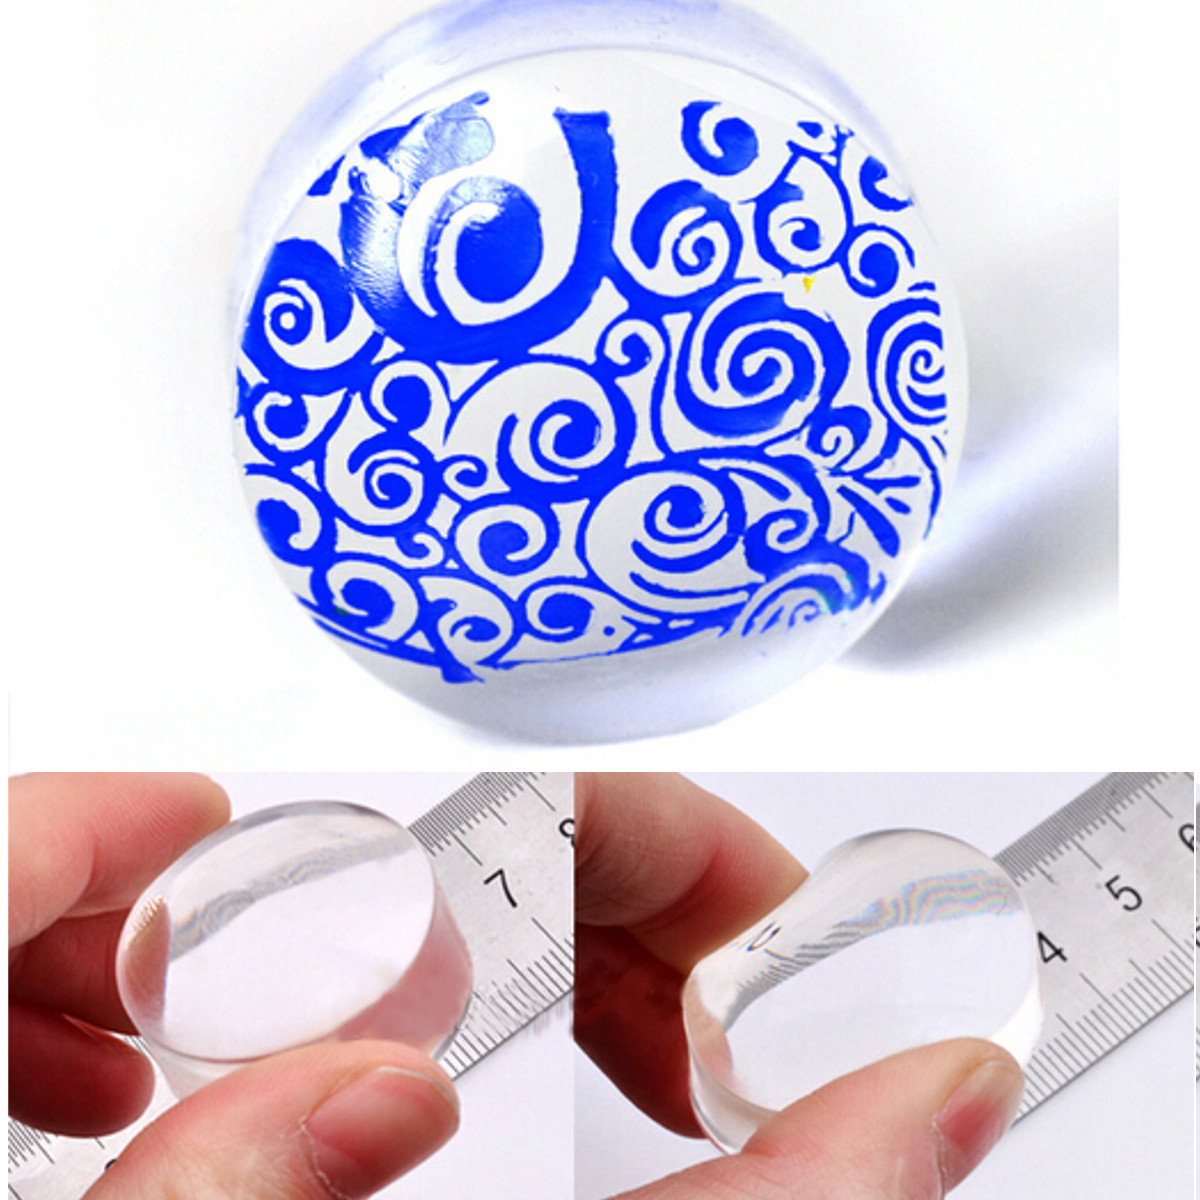 

Transparent Silicone Nail Art Stamper Stamping Template With Cap Scraper